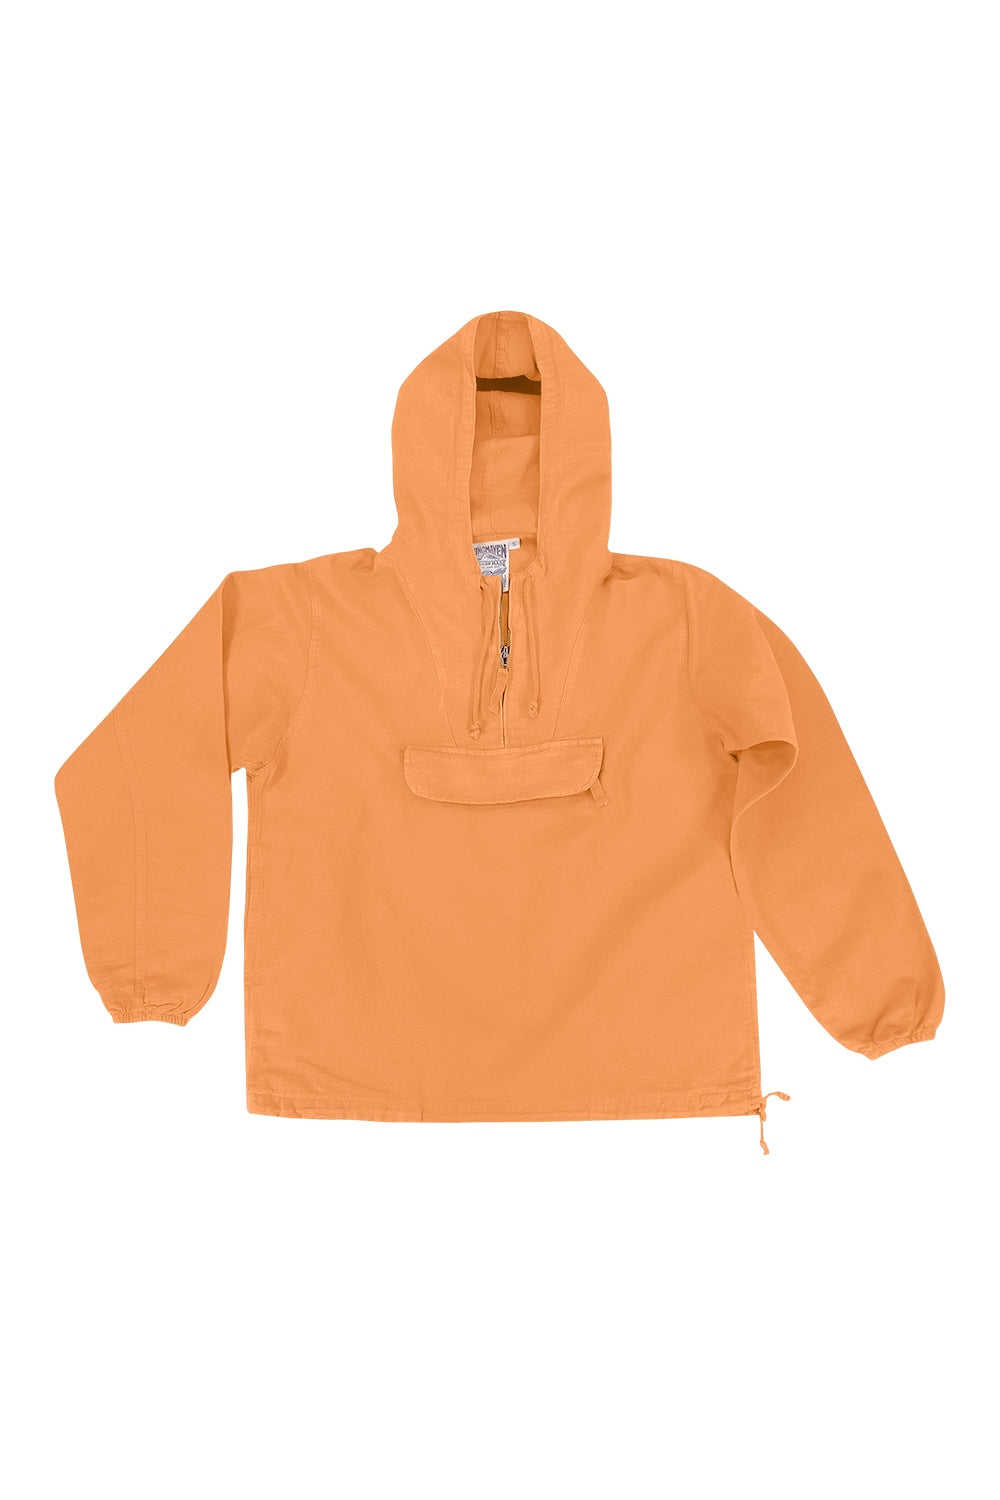 Shoreline Anorak Jacket | Jungmaven Hemp Clothing & Accessories / Color: Apricot Crush